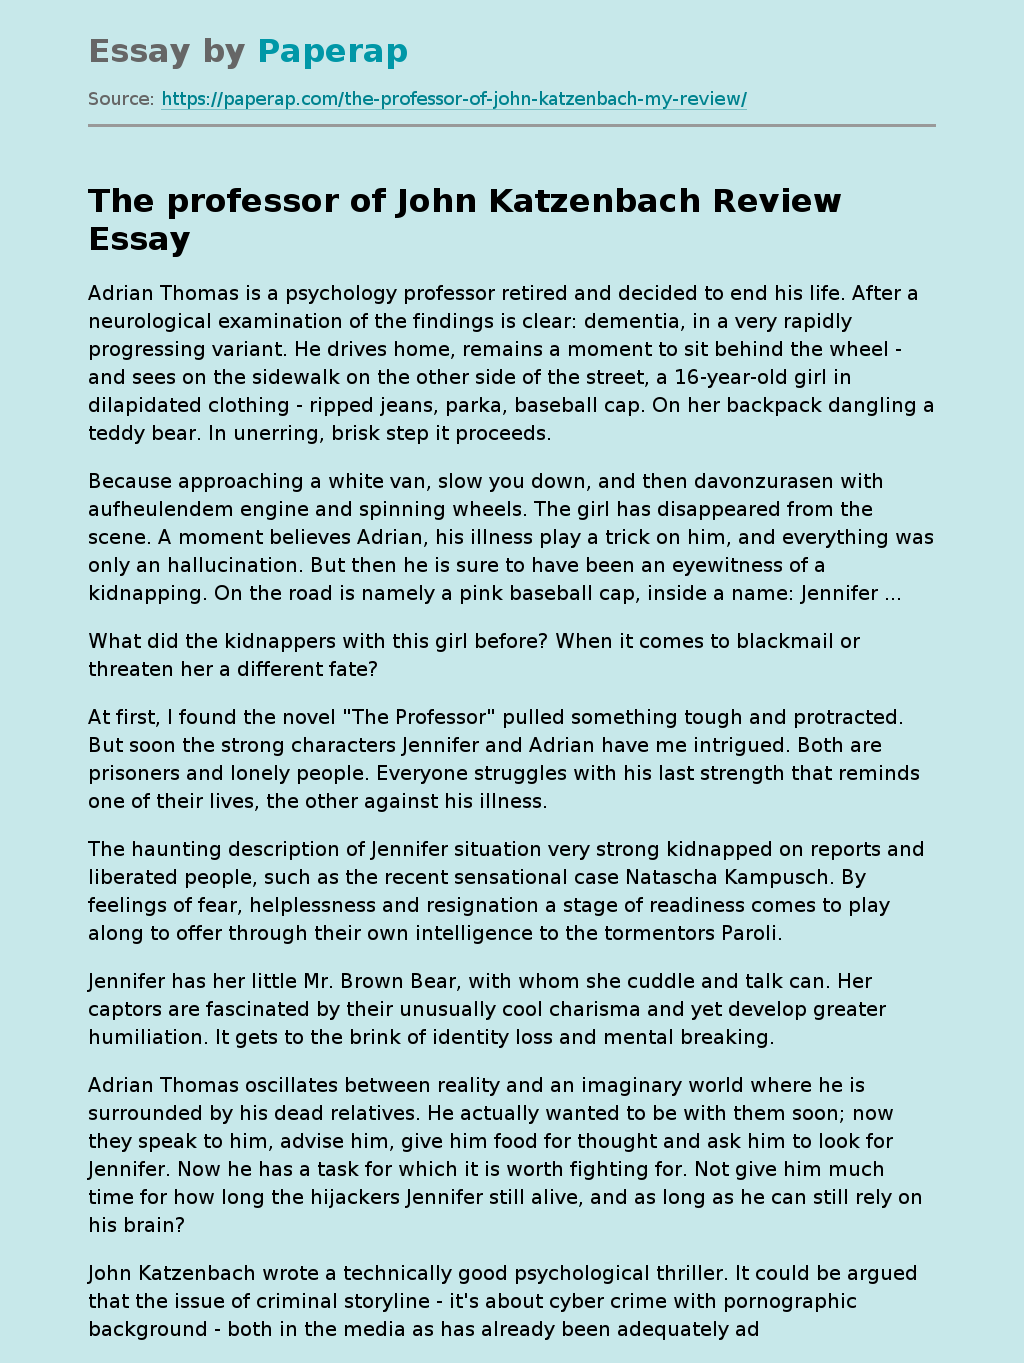 The professor of John Katzenbach Review